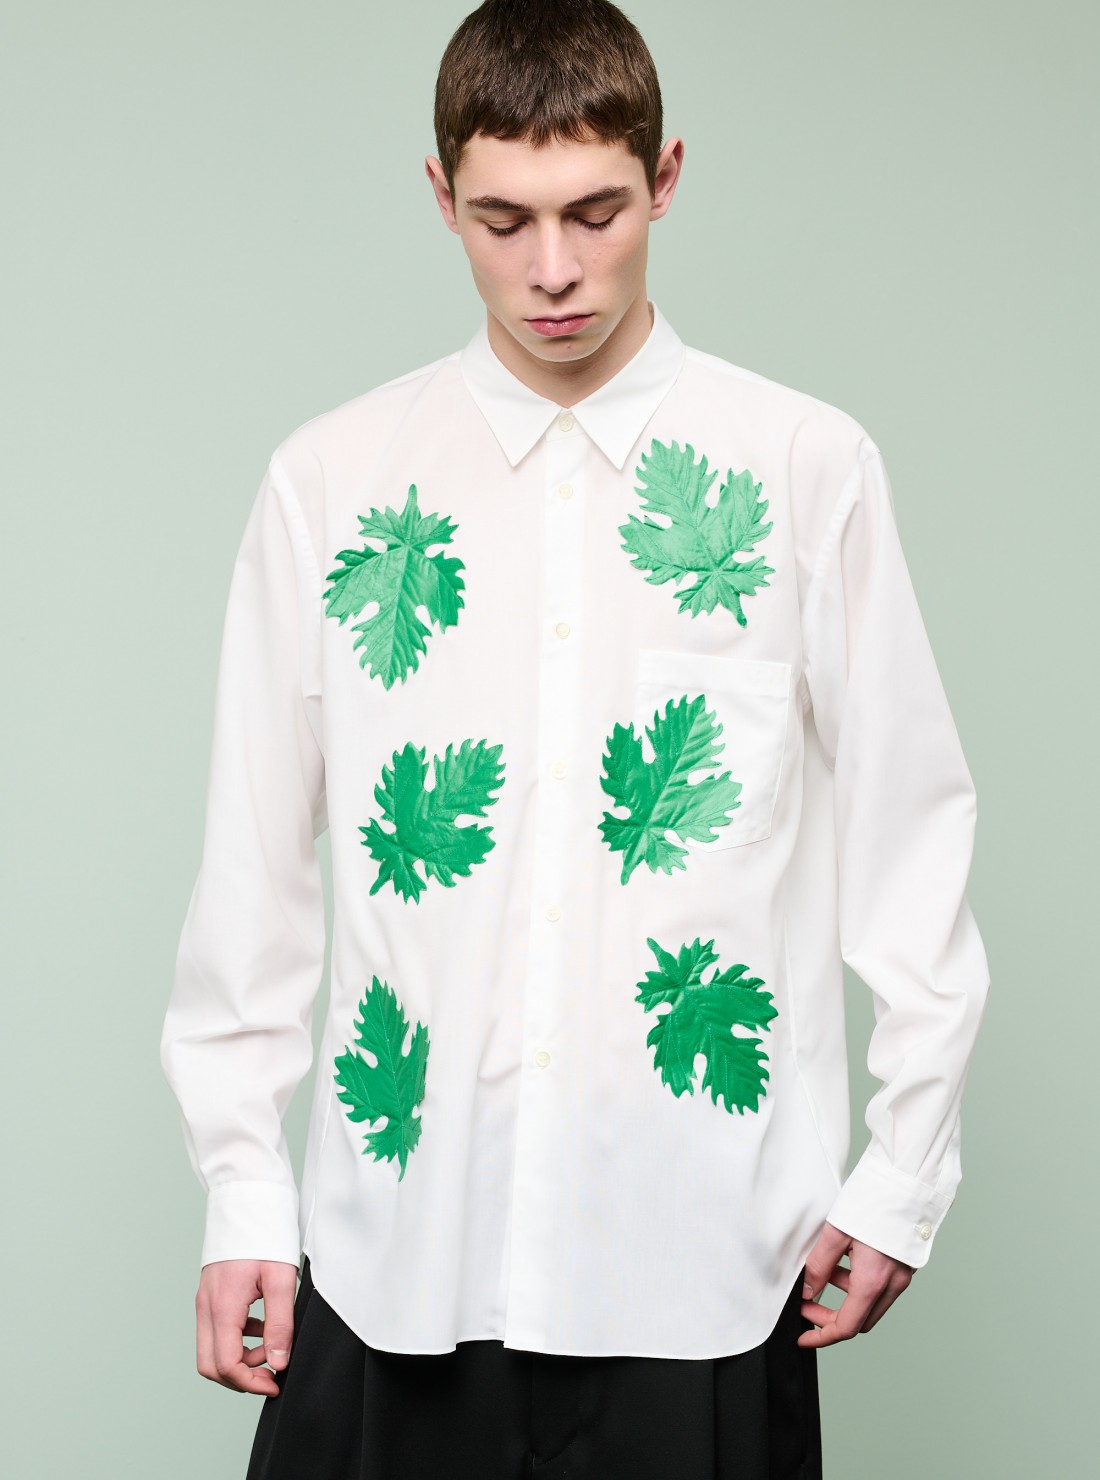 Leaf embroidered shirt